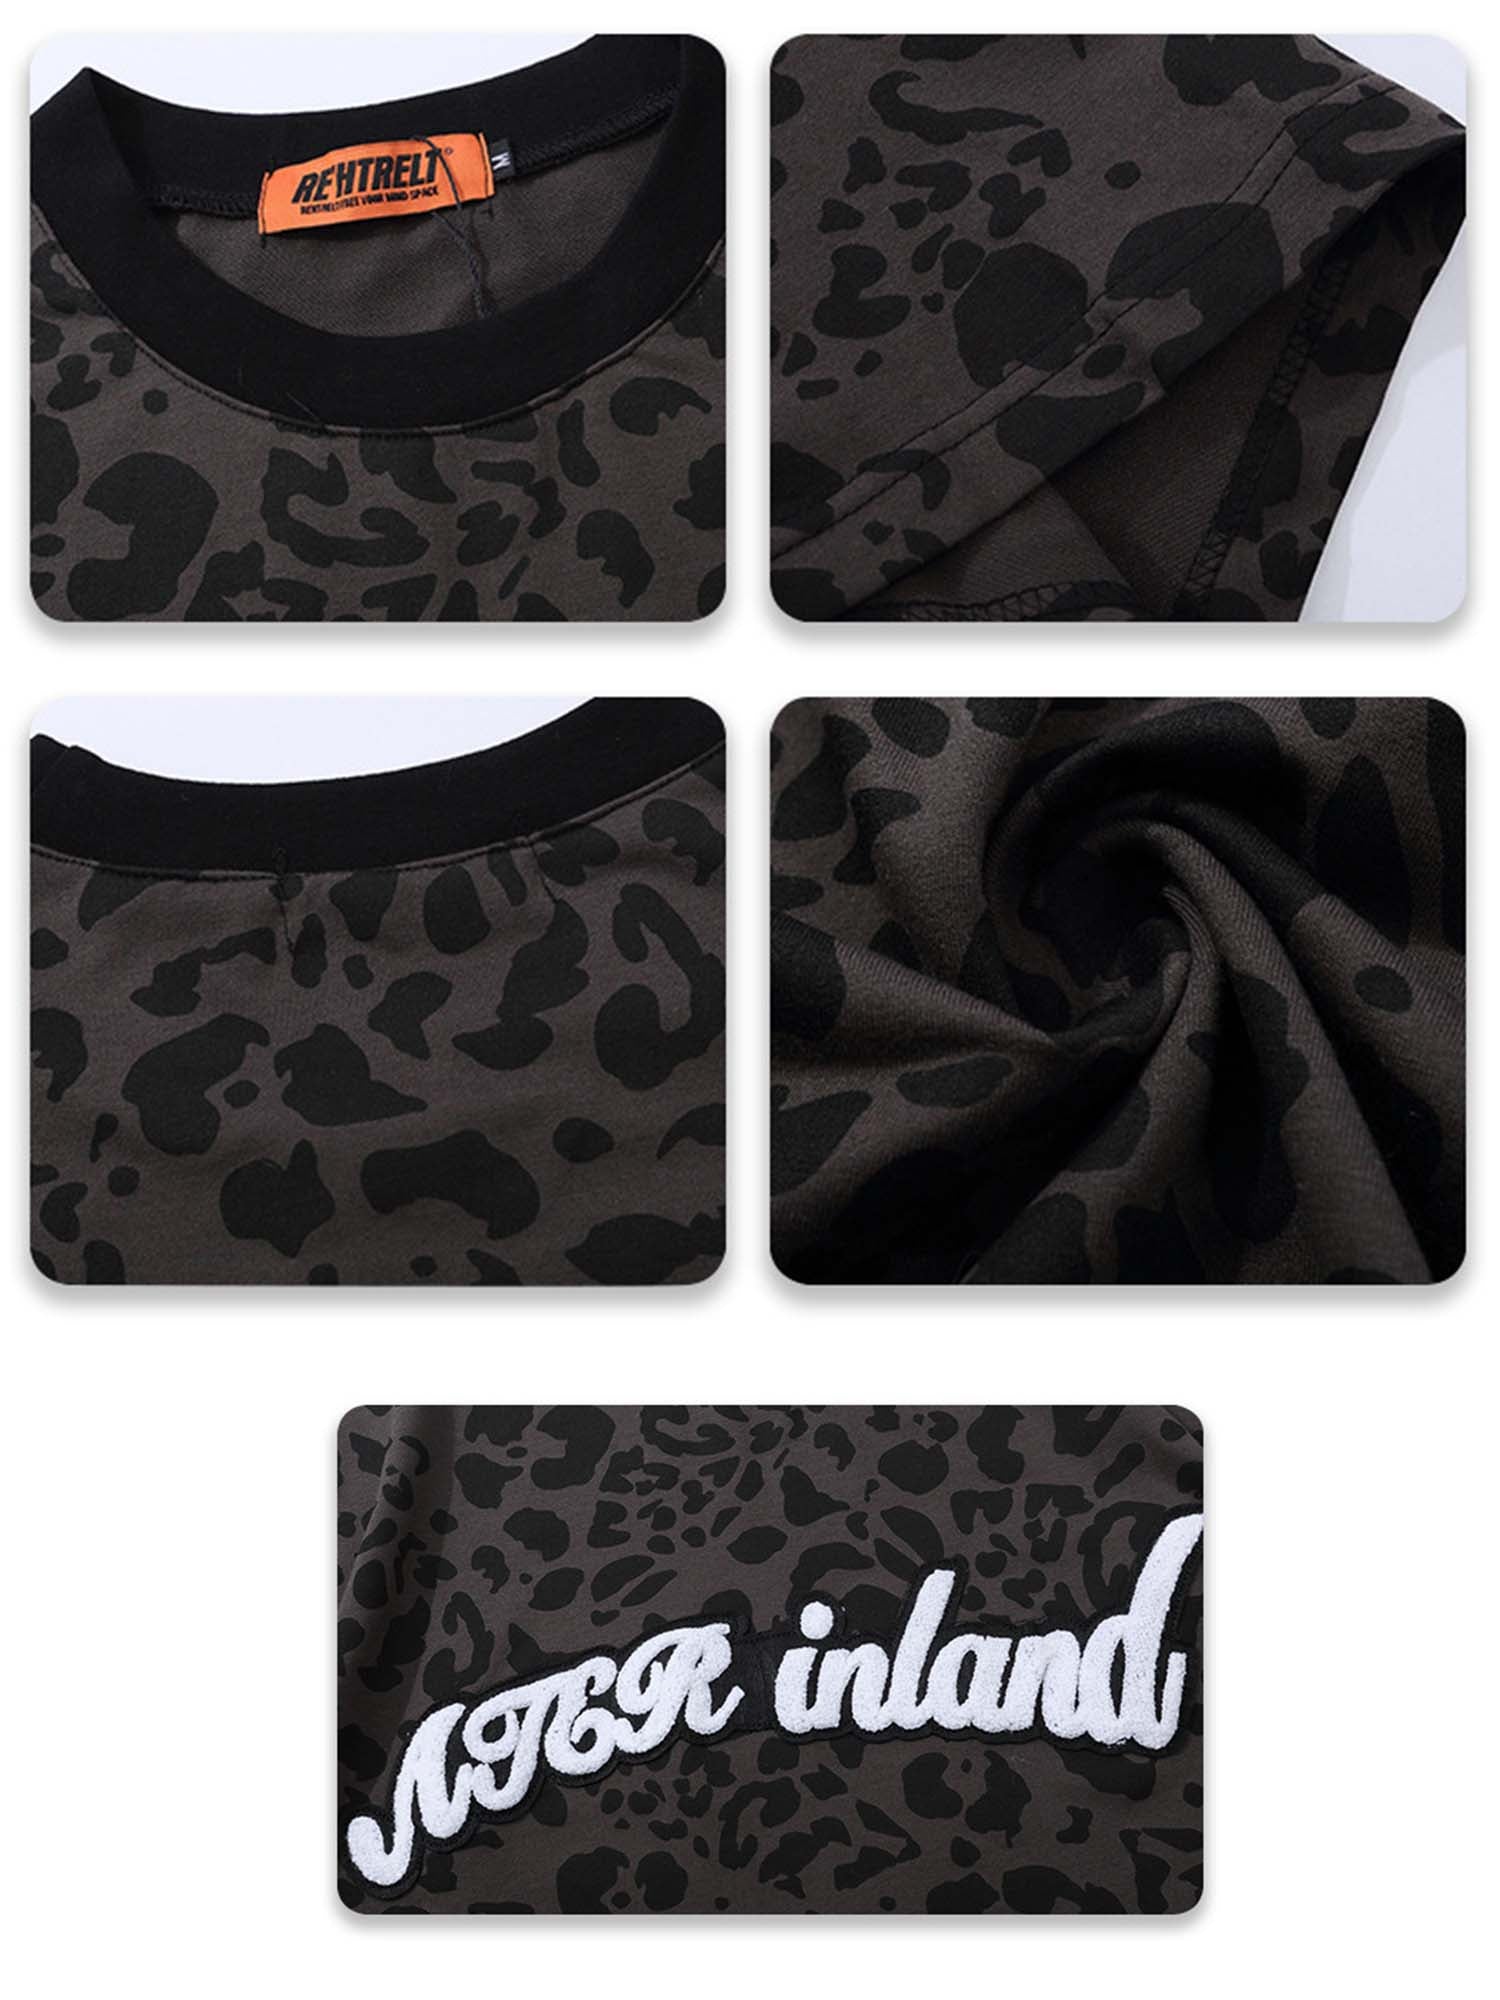 JUSTNOTAG Vintage Leopard Print Cotton Short Sleeve Tee